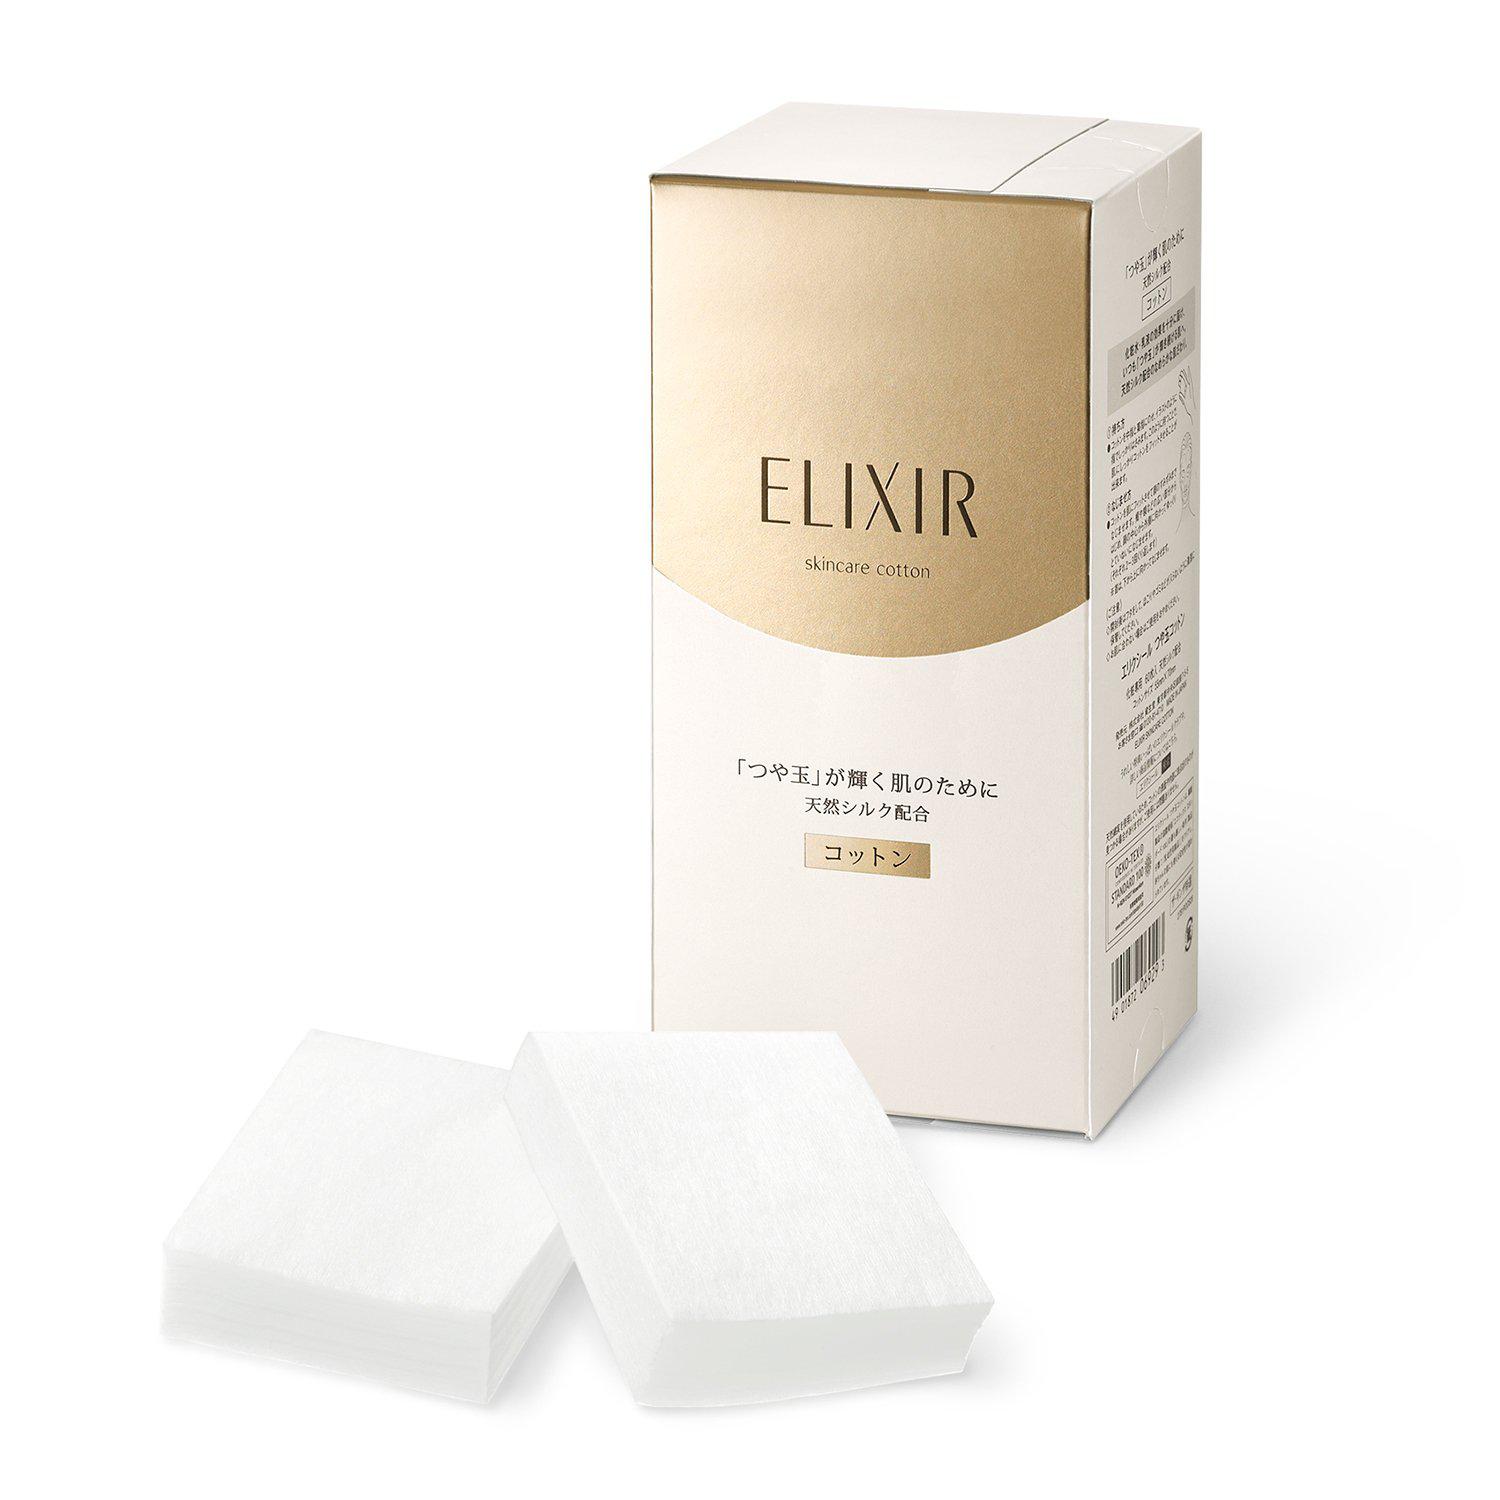 Shiseido Elixir Skincare Silk Cotton Pad 60 Sheets